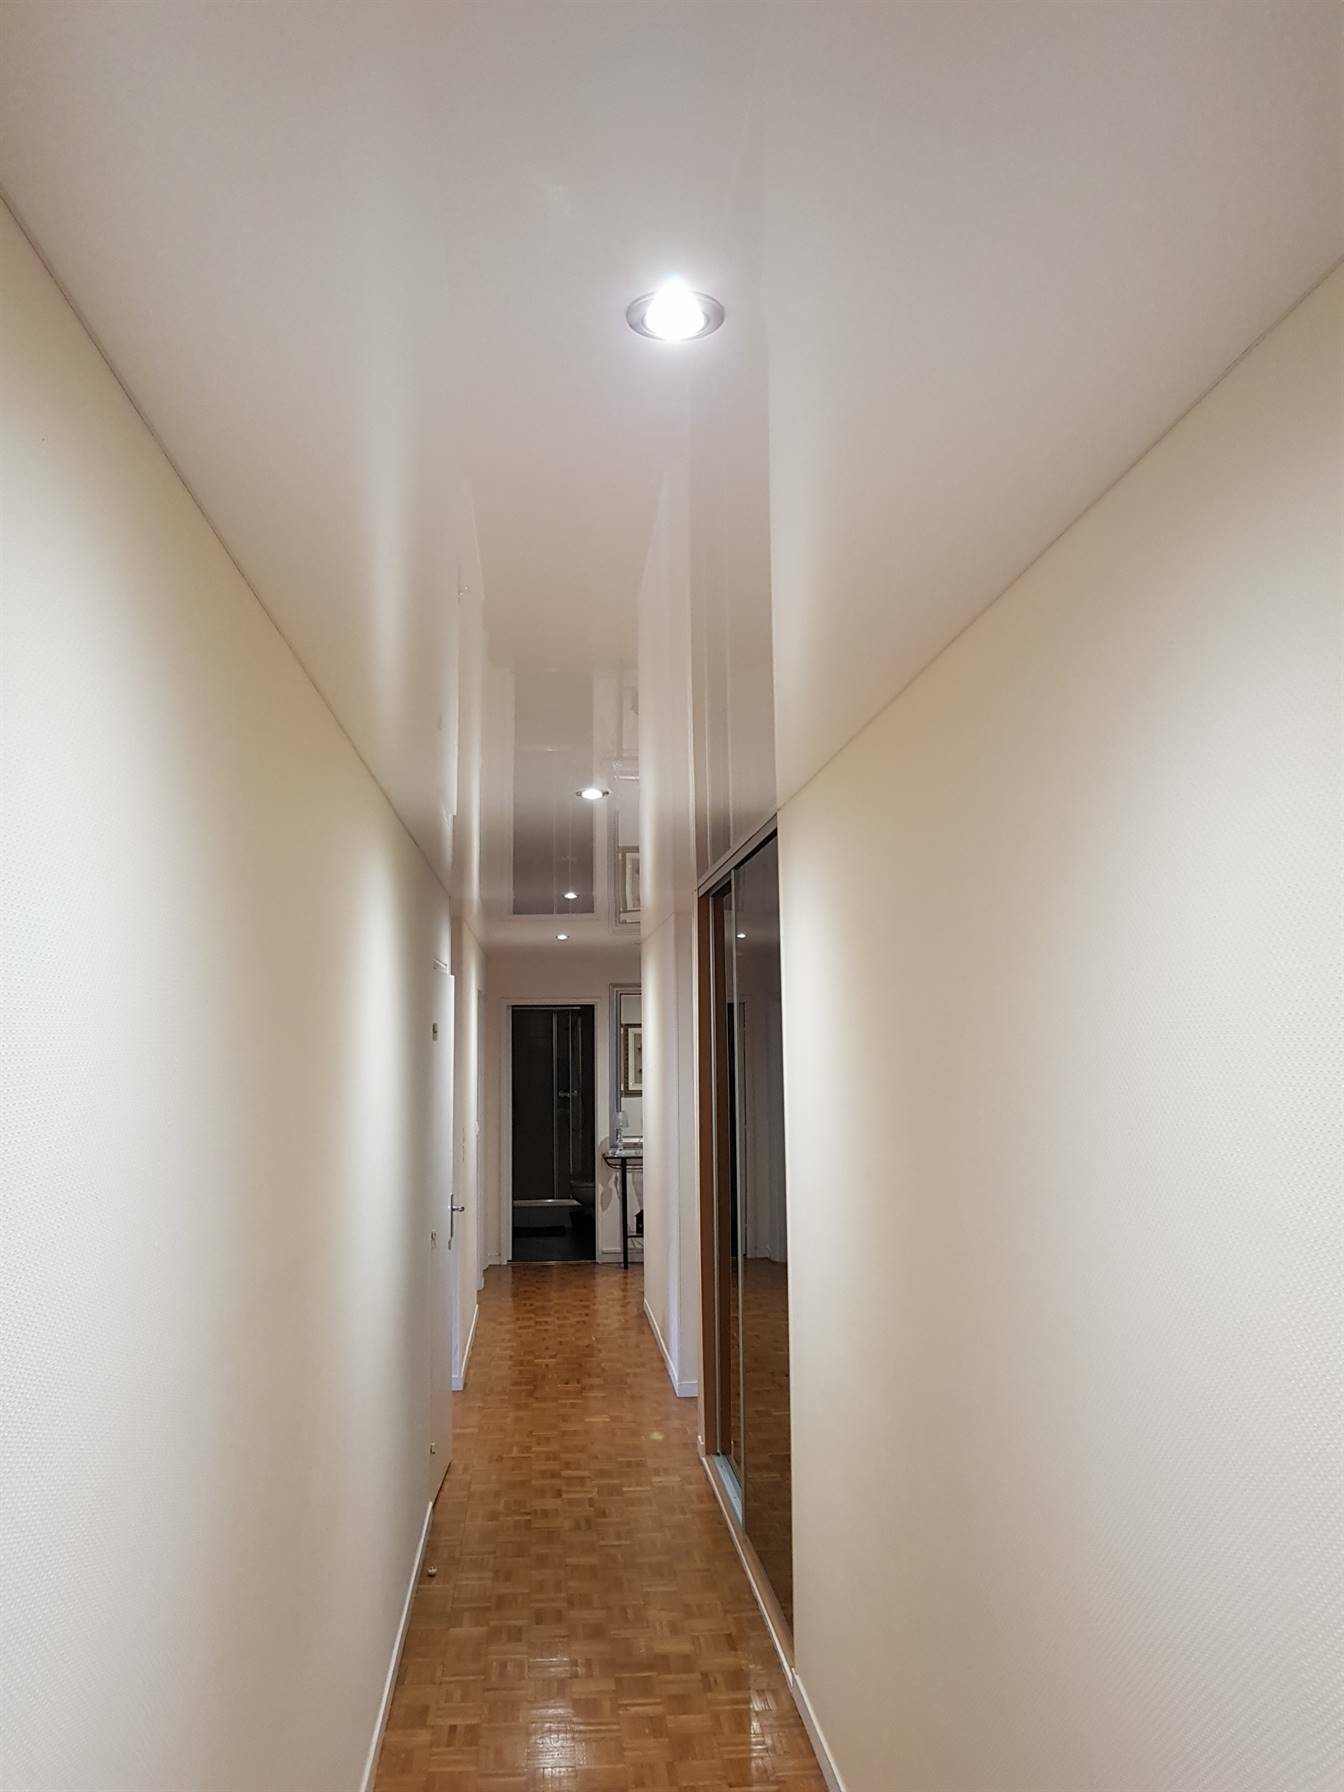 artisan plafond tendu - Quel éclairage choisir pour embellir un plafond  tendu ?